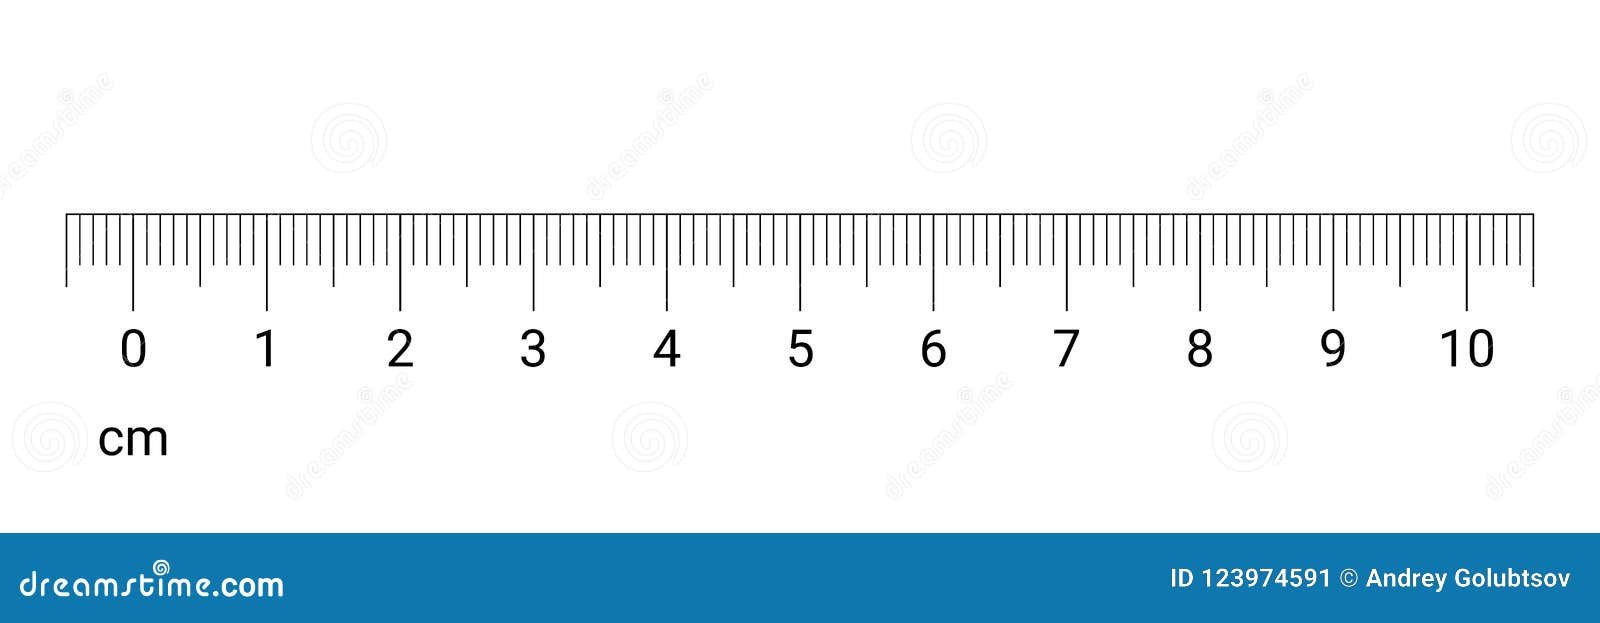 ruler cm measurement numbers  scale